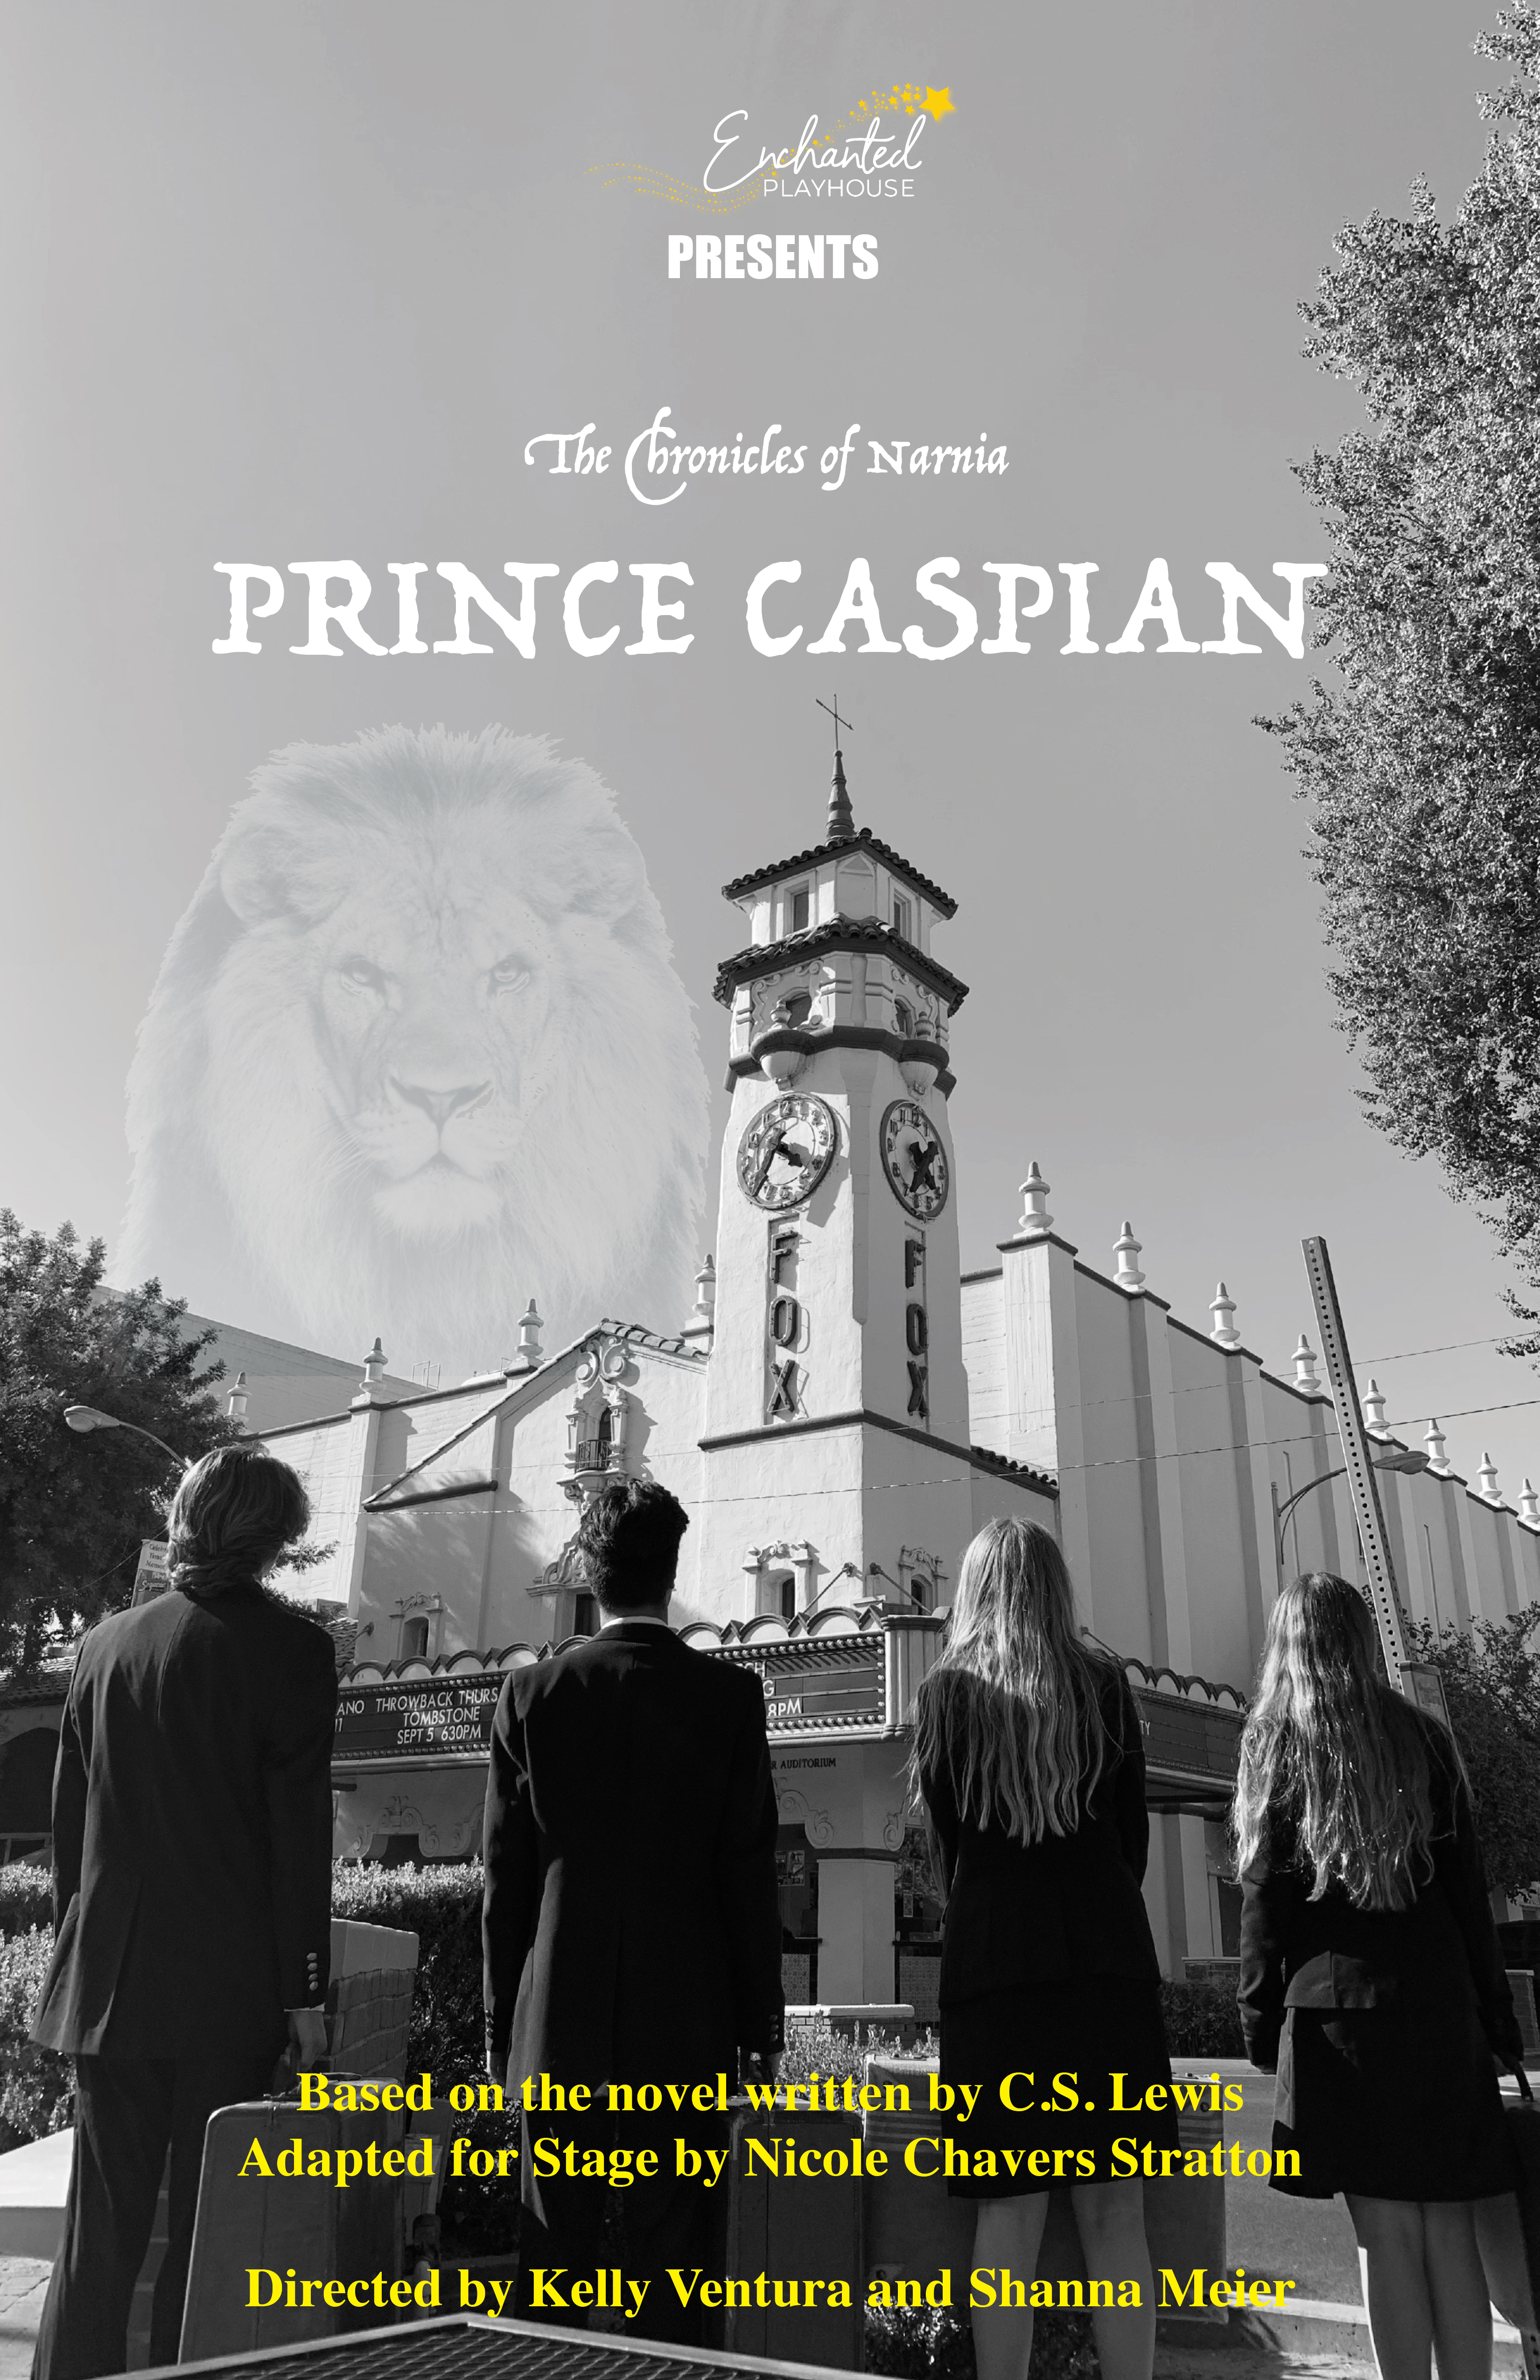 The Cbronicles of Narnia – PRINCE CASPIAN